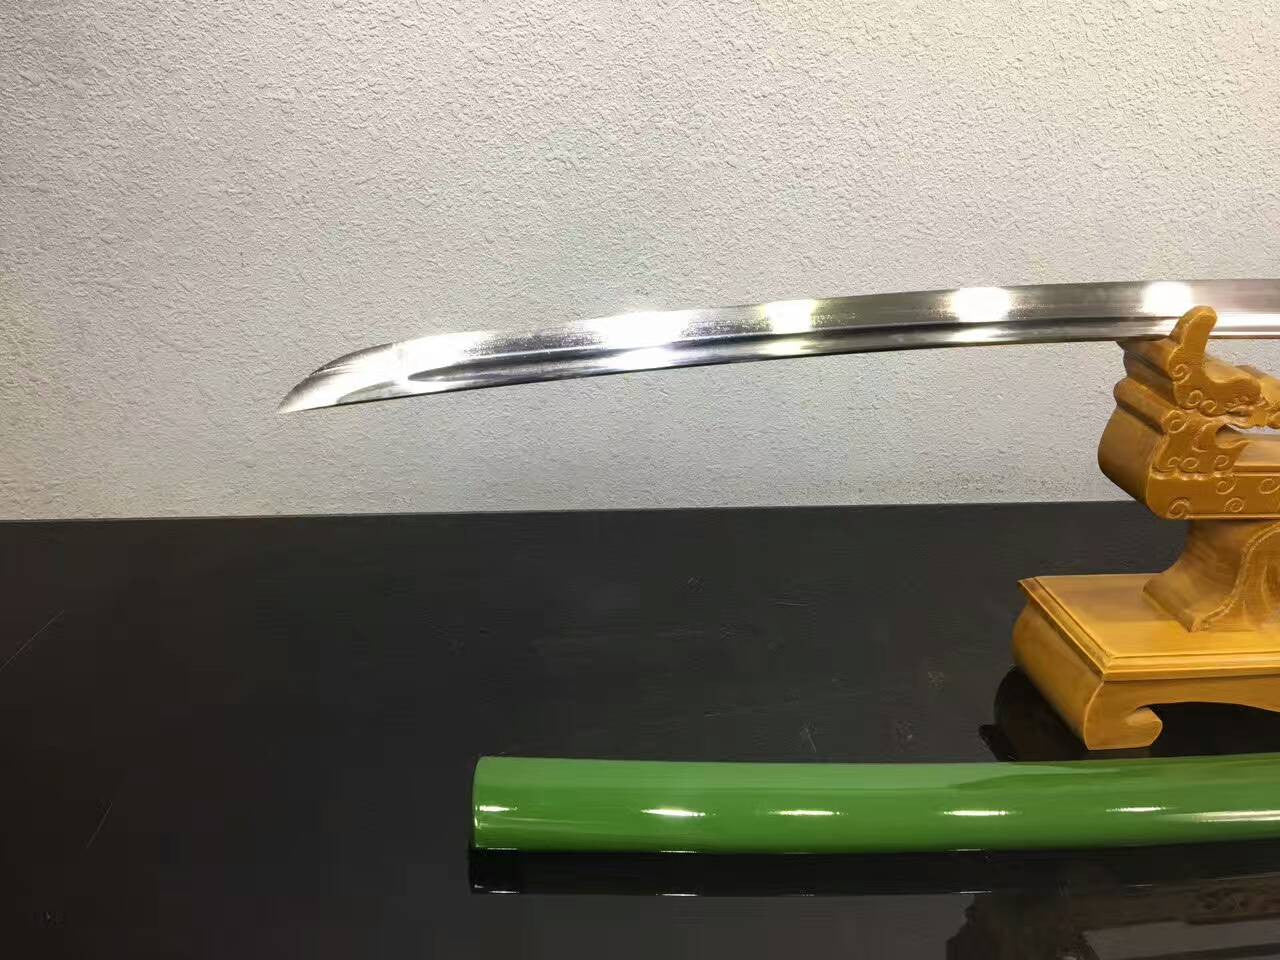 Samurai sword,katana(High manganese steel,Green scabbard,Alloy fitted)Full tang,Length 39" - Chinese sword shop